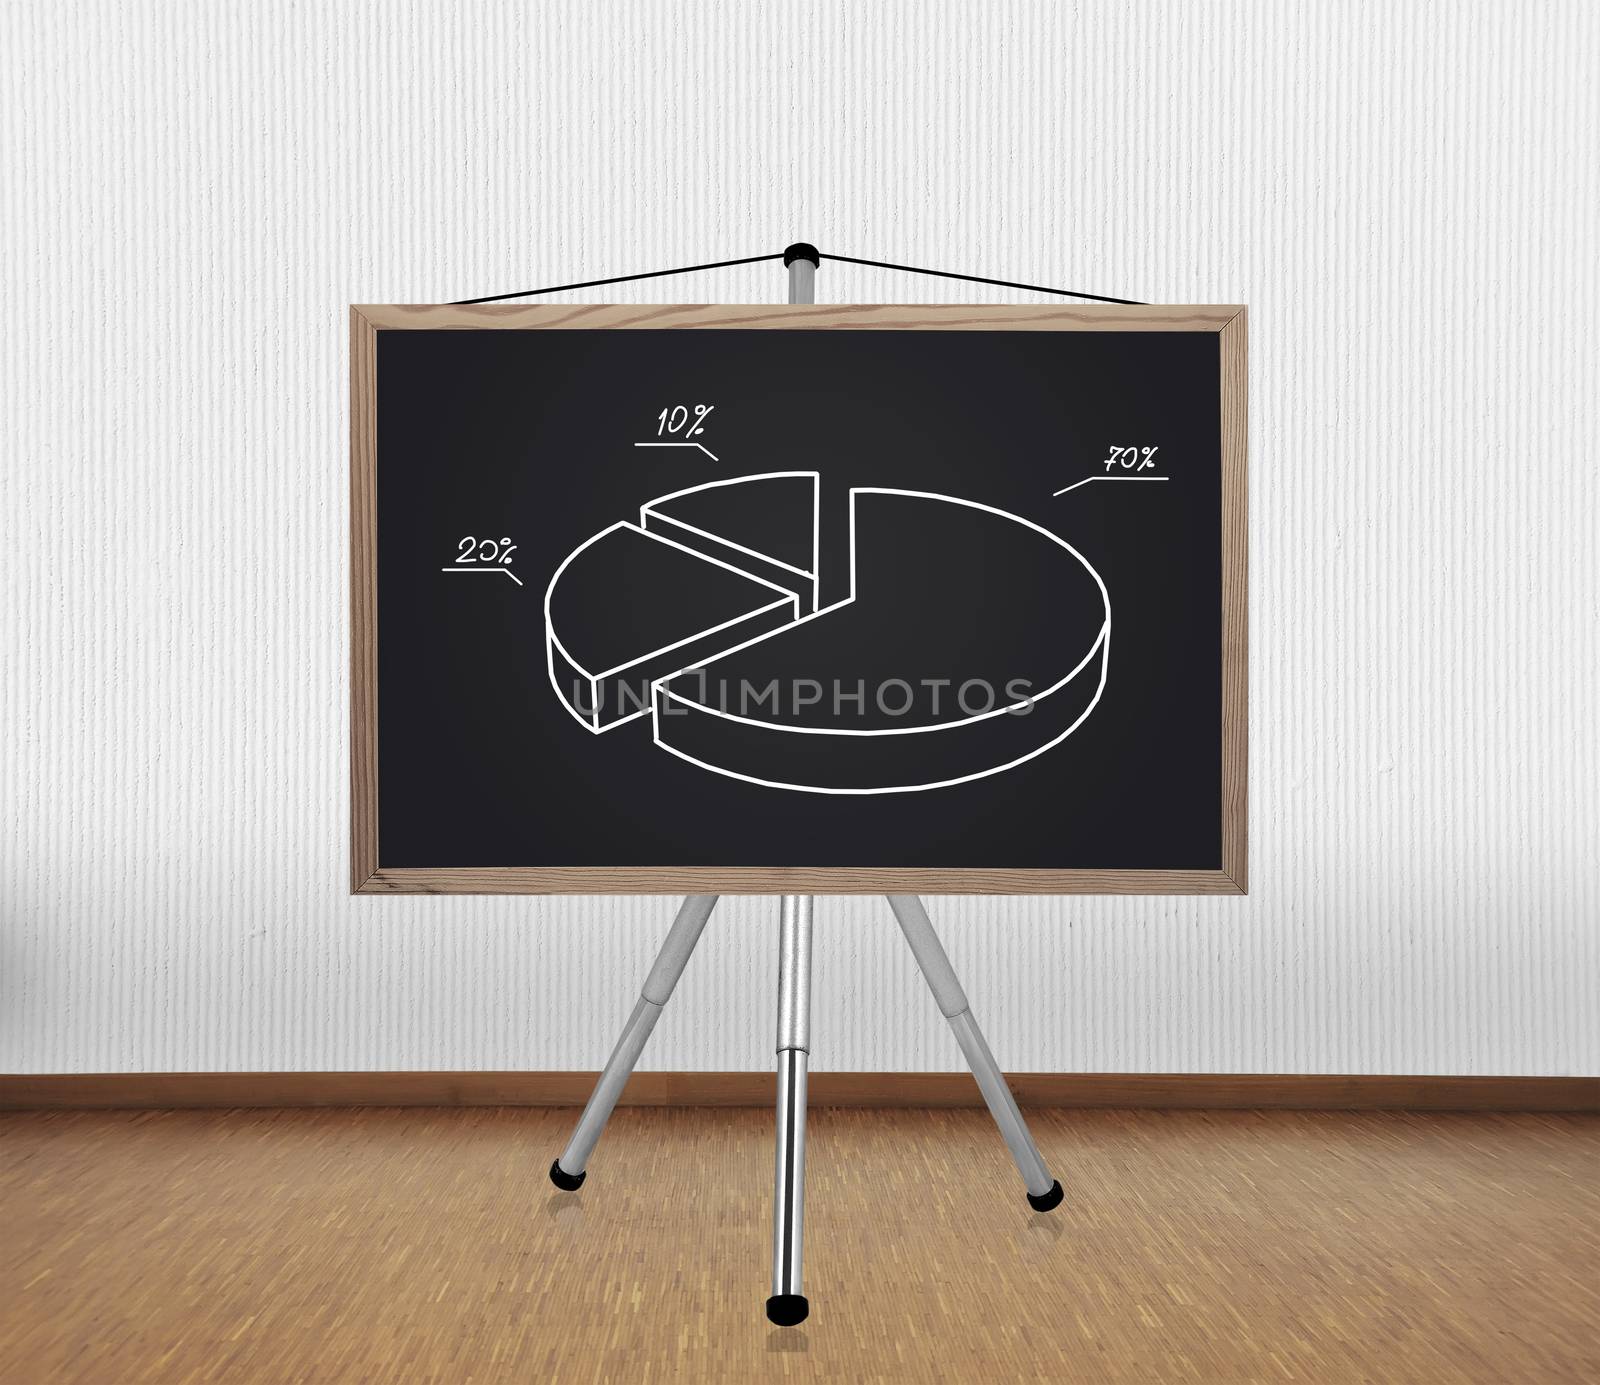 blackboard on tripod with drawing business chart